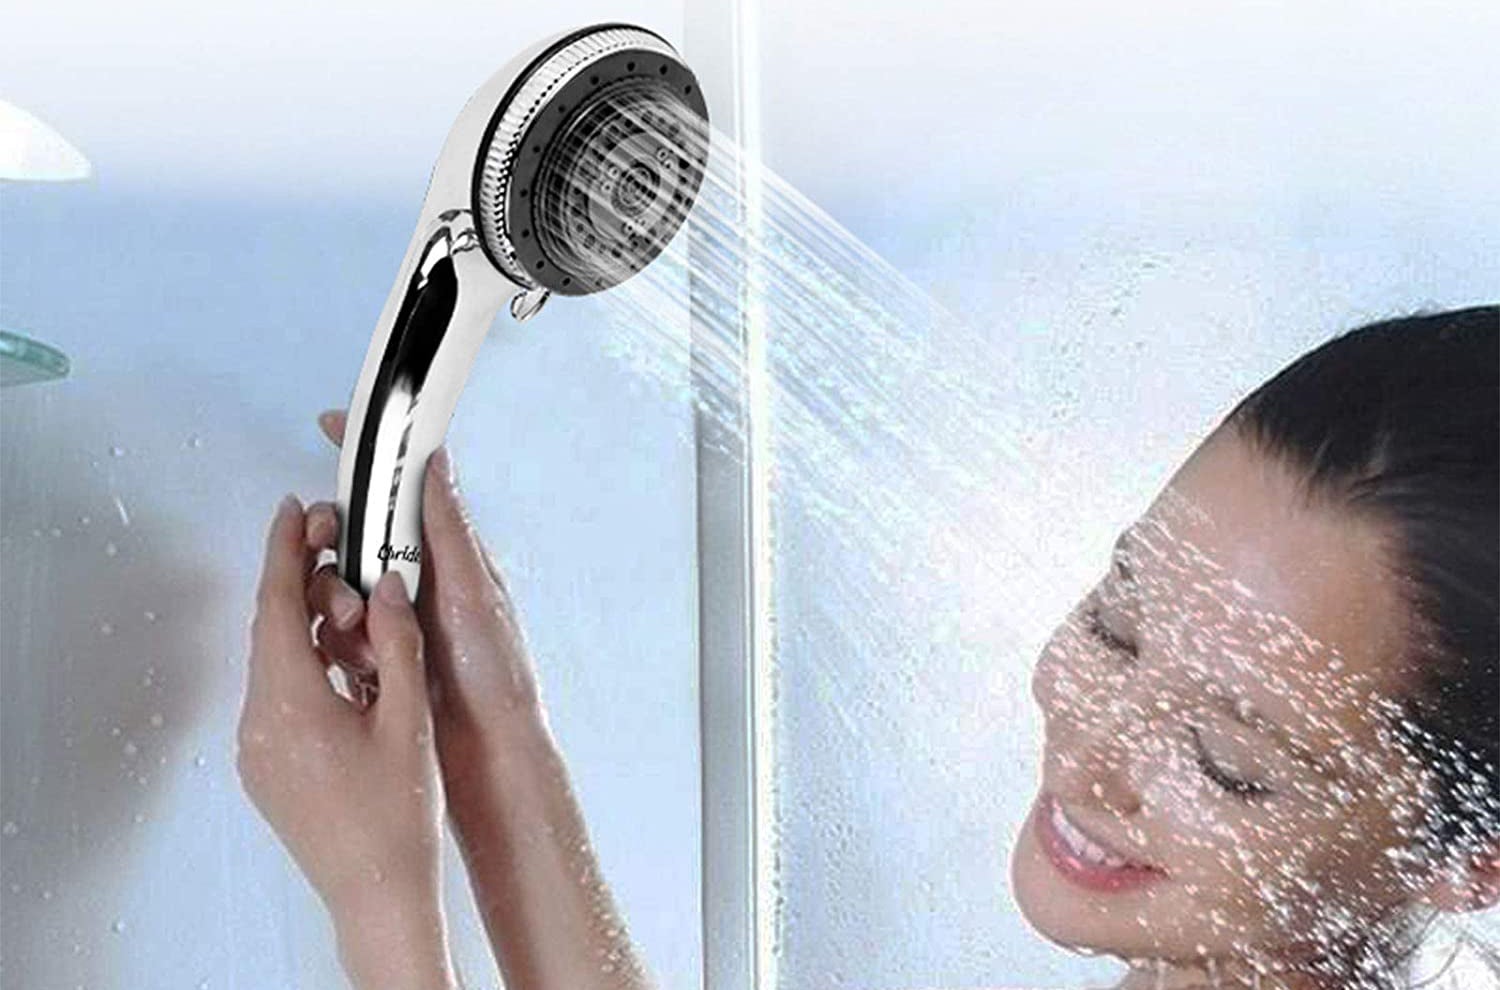 Top 5 Reasons to Buy a Handheld Showerhead